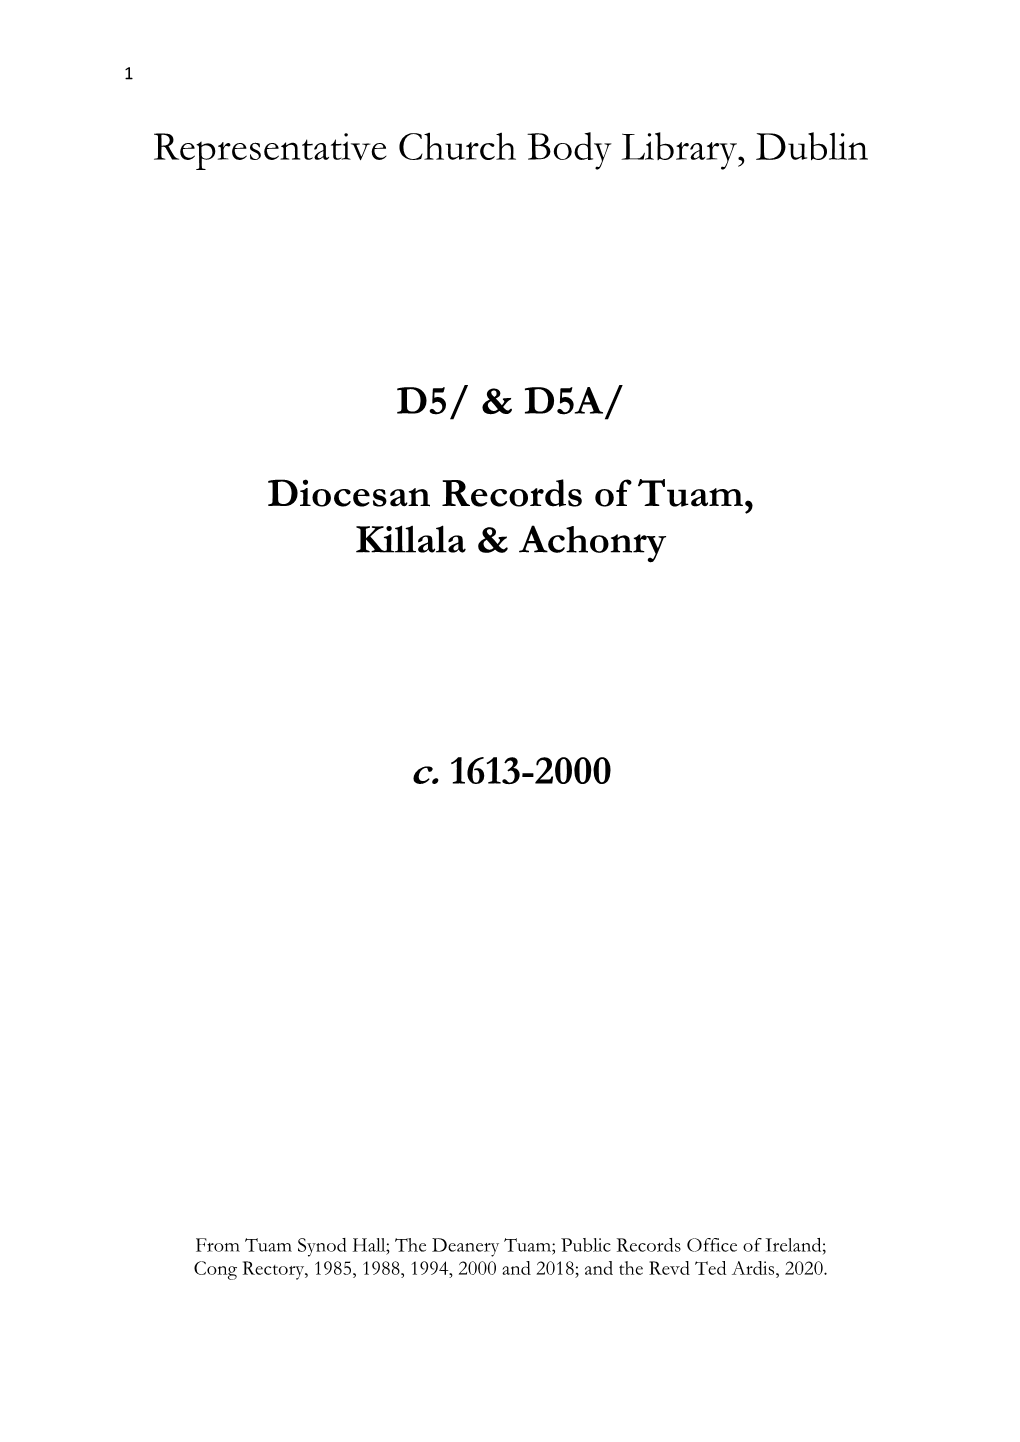 Diocesan Records of Tuam, Killala & Achonry C. 1613